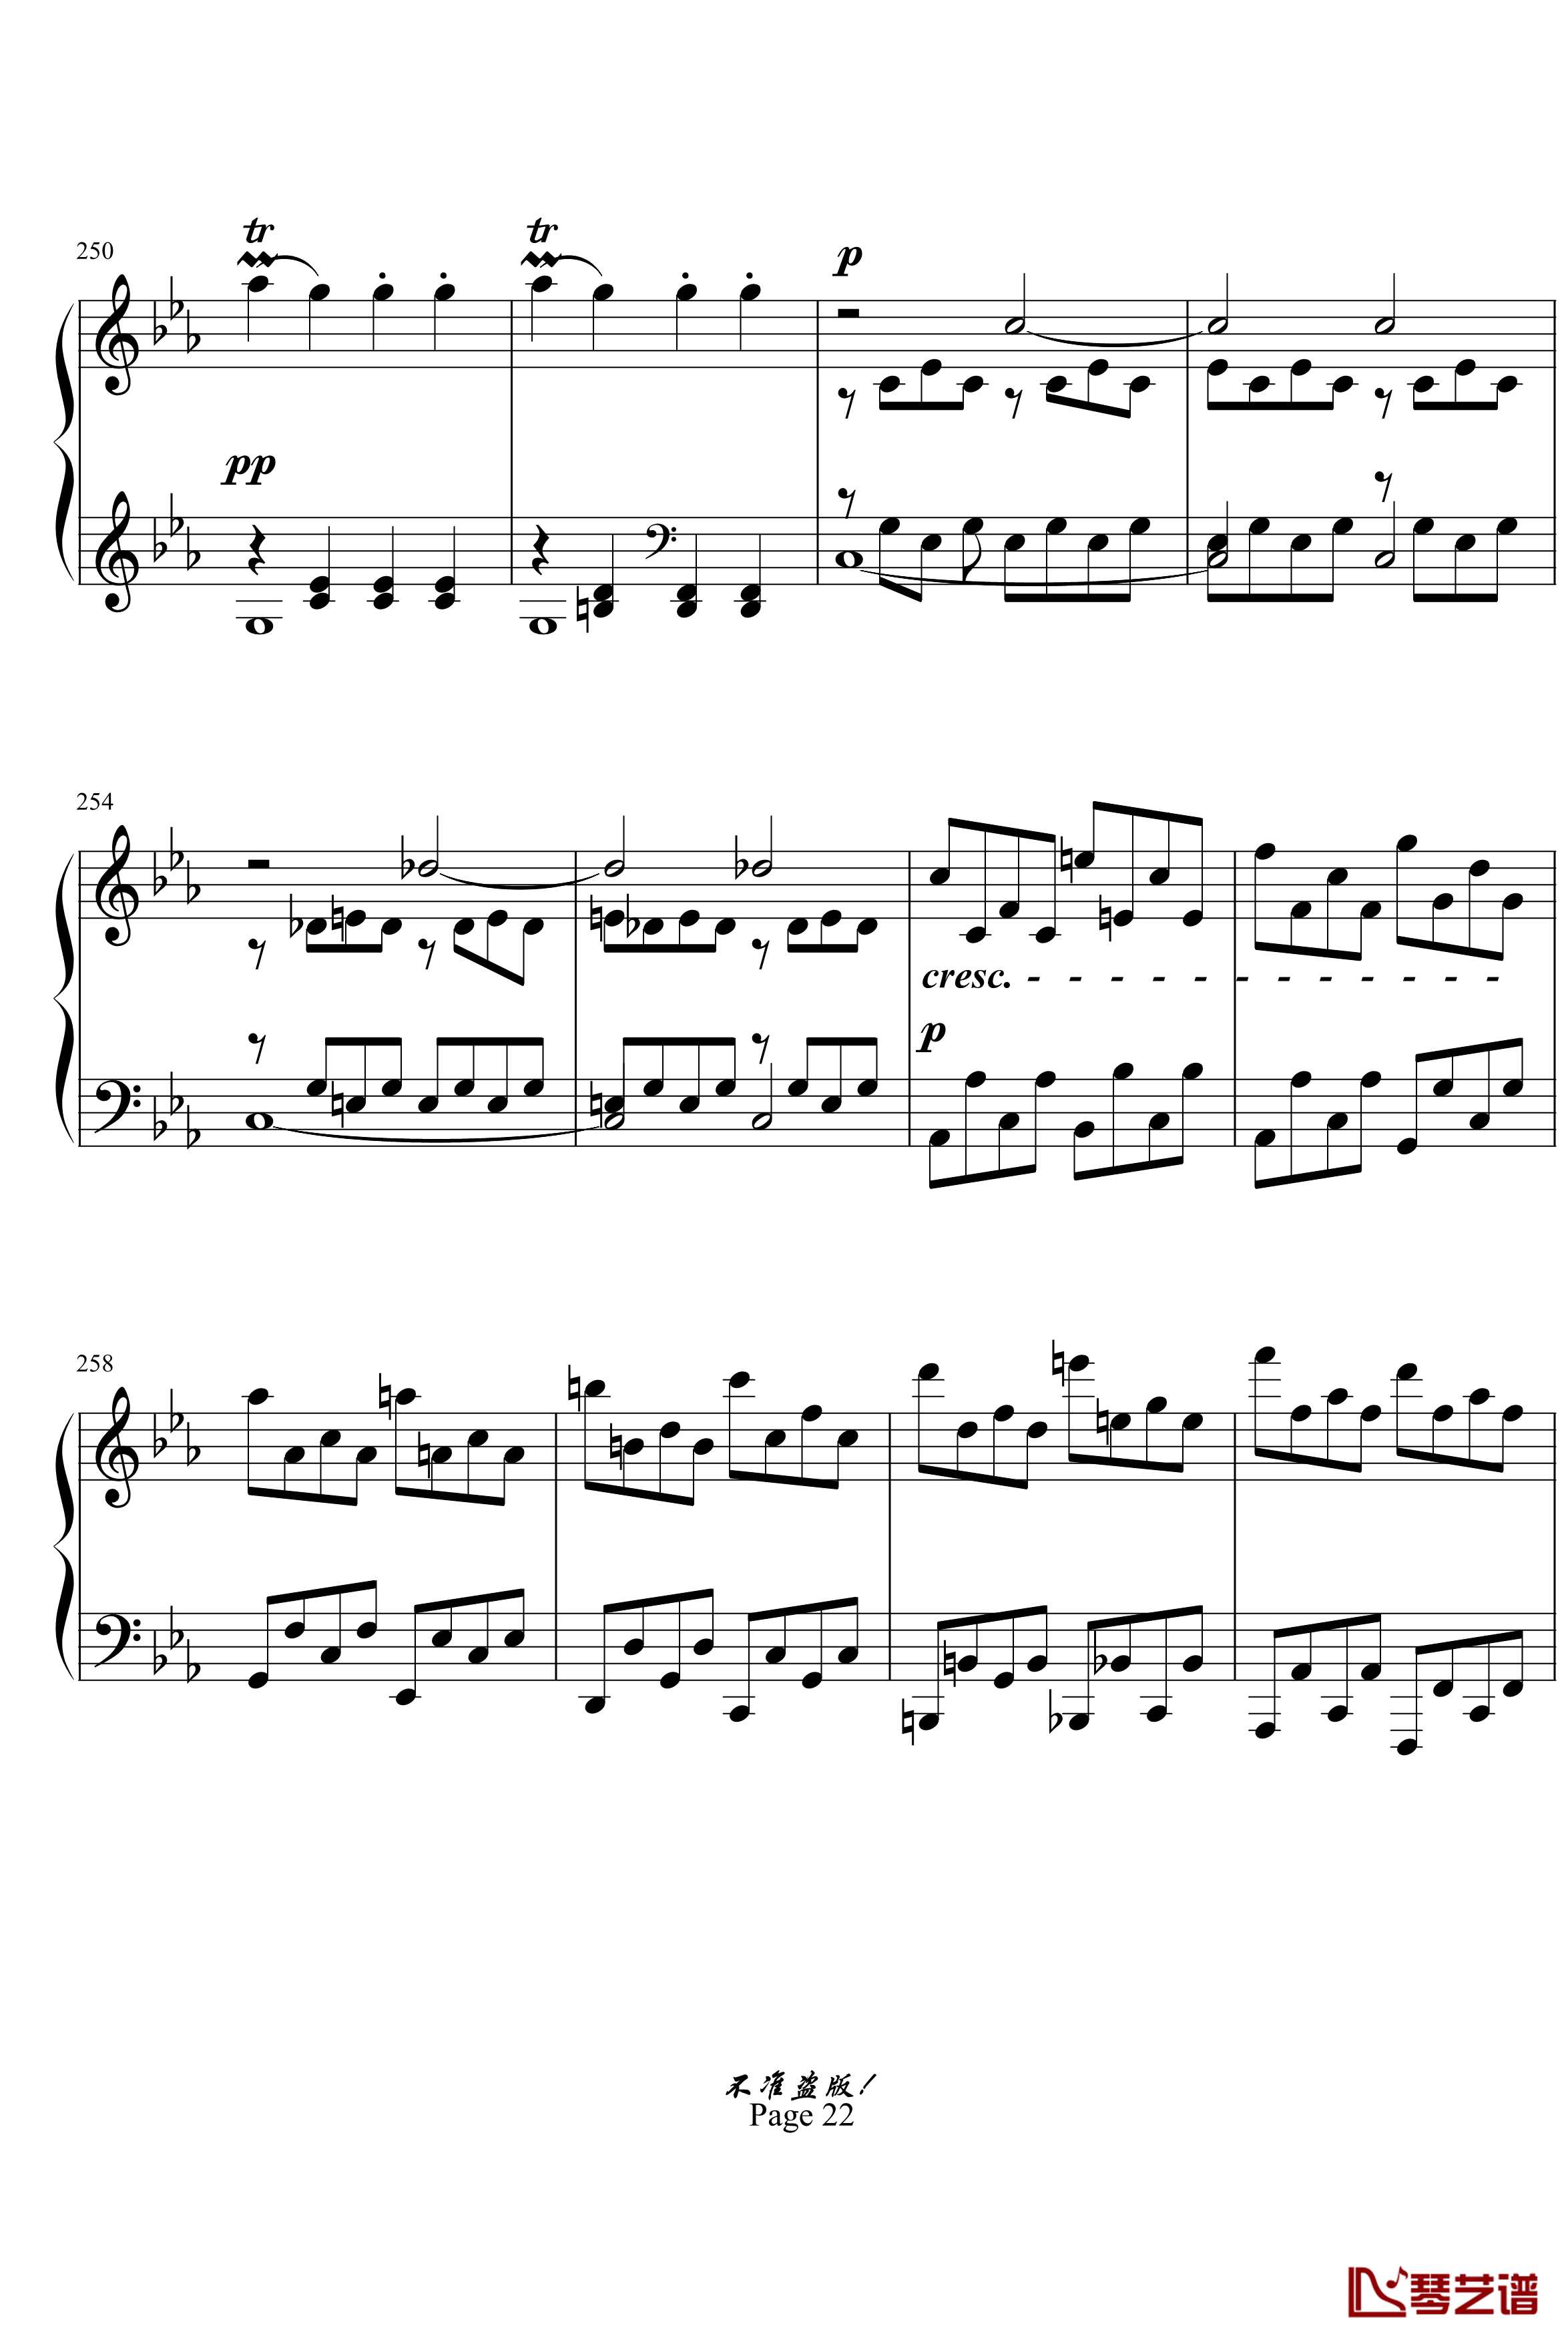 c小调第八钢琴奏鸣曲钢琴谱-悲怆第一乐章-beethoven-贝多芬22